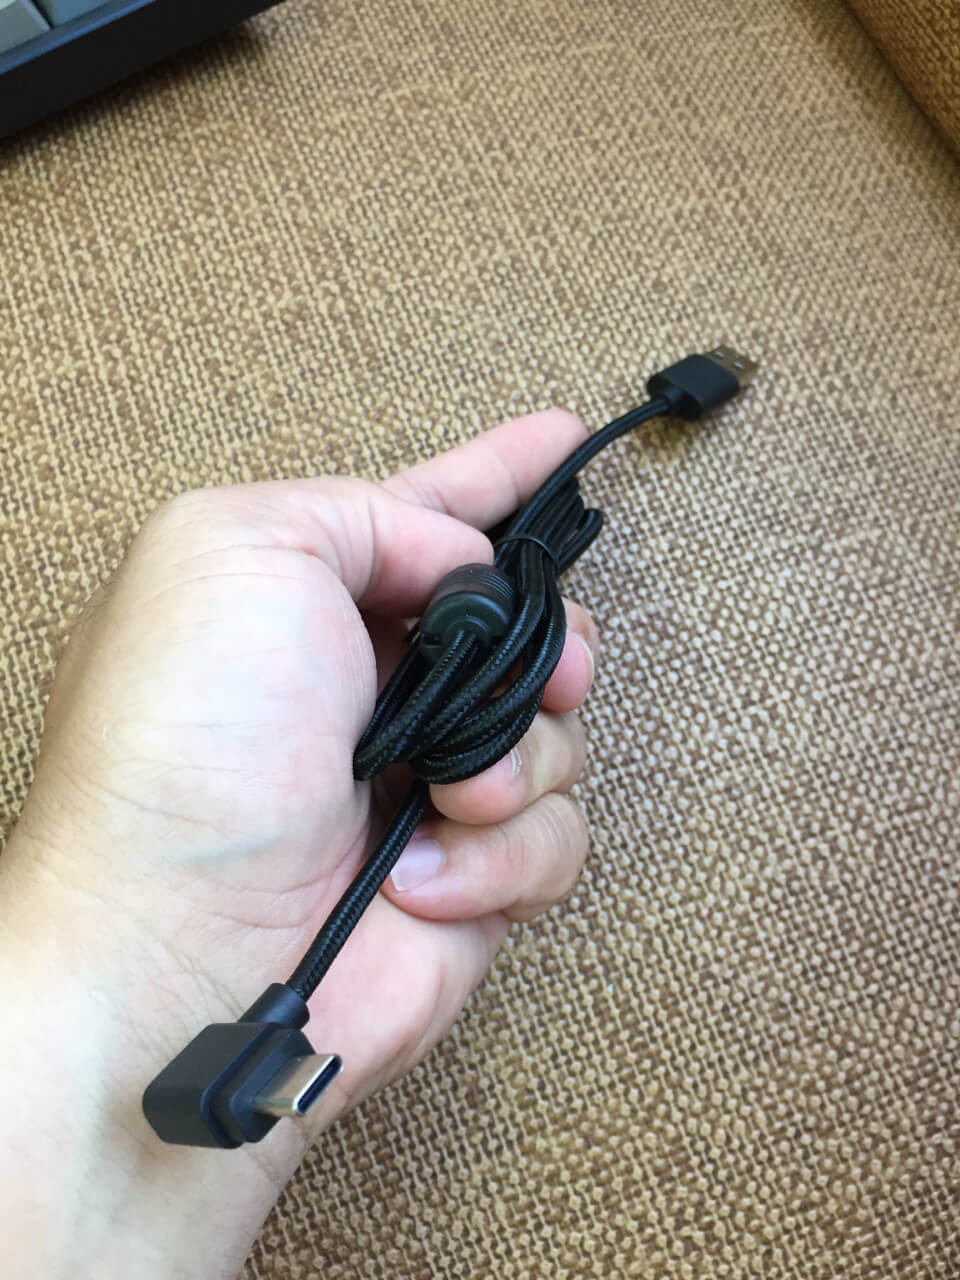 power cord of Keychron K4